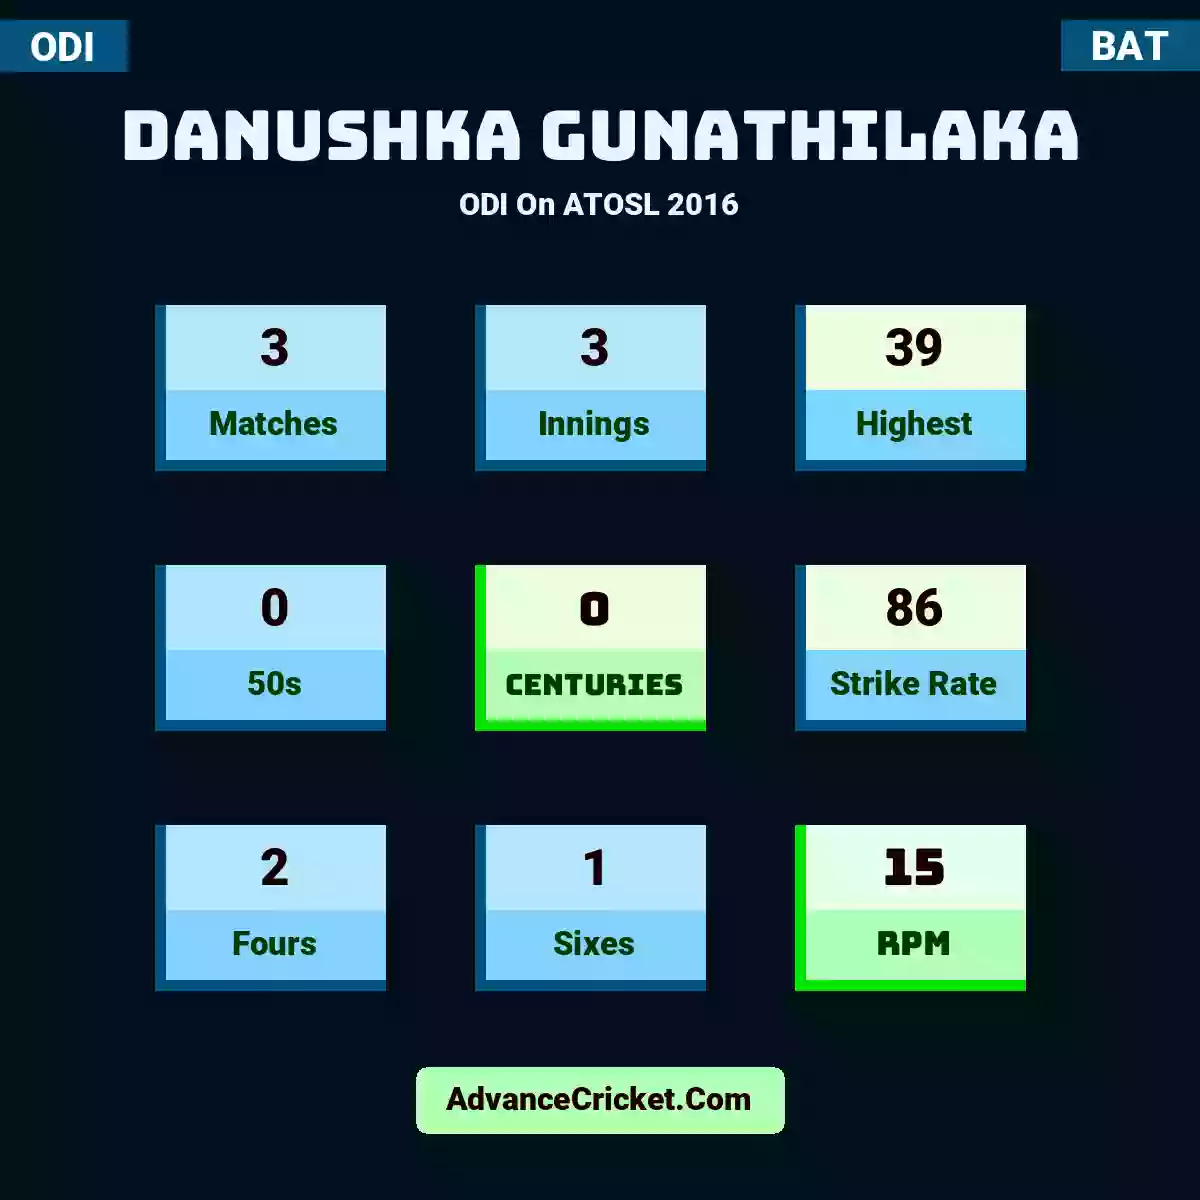 Danushka Gunathilaka ODI  On ATOSL 2016, Danushka Gunathilaka played 3 matches, scored 39 runs as highest, 0 half-centuries, and 0 centuries, with a strike rate of 86. D.Gunathilaka hit 2 fours and 1 sixes, with an RPM of 15.